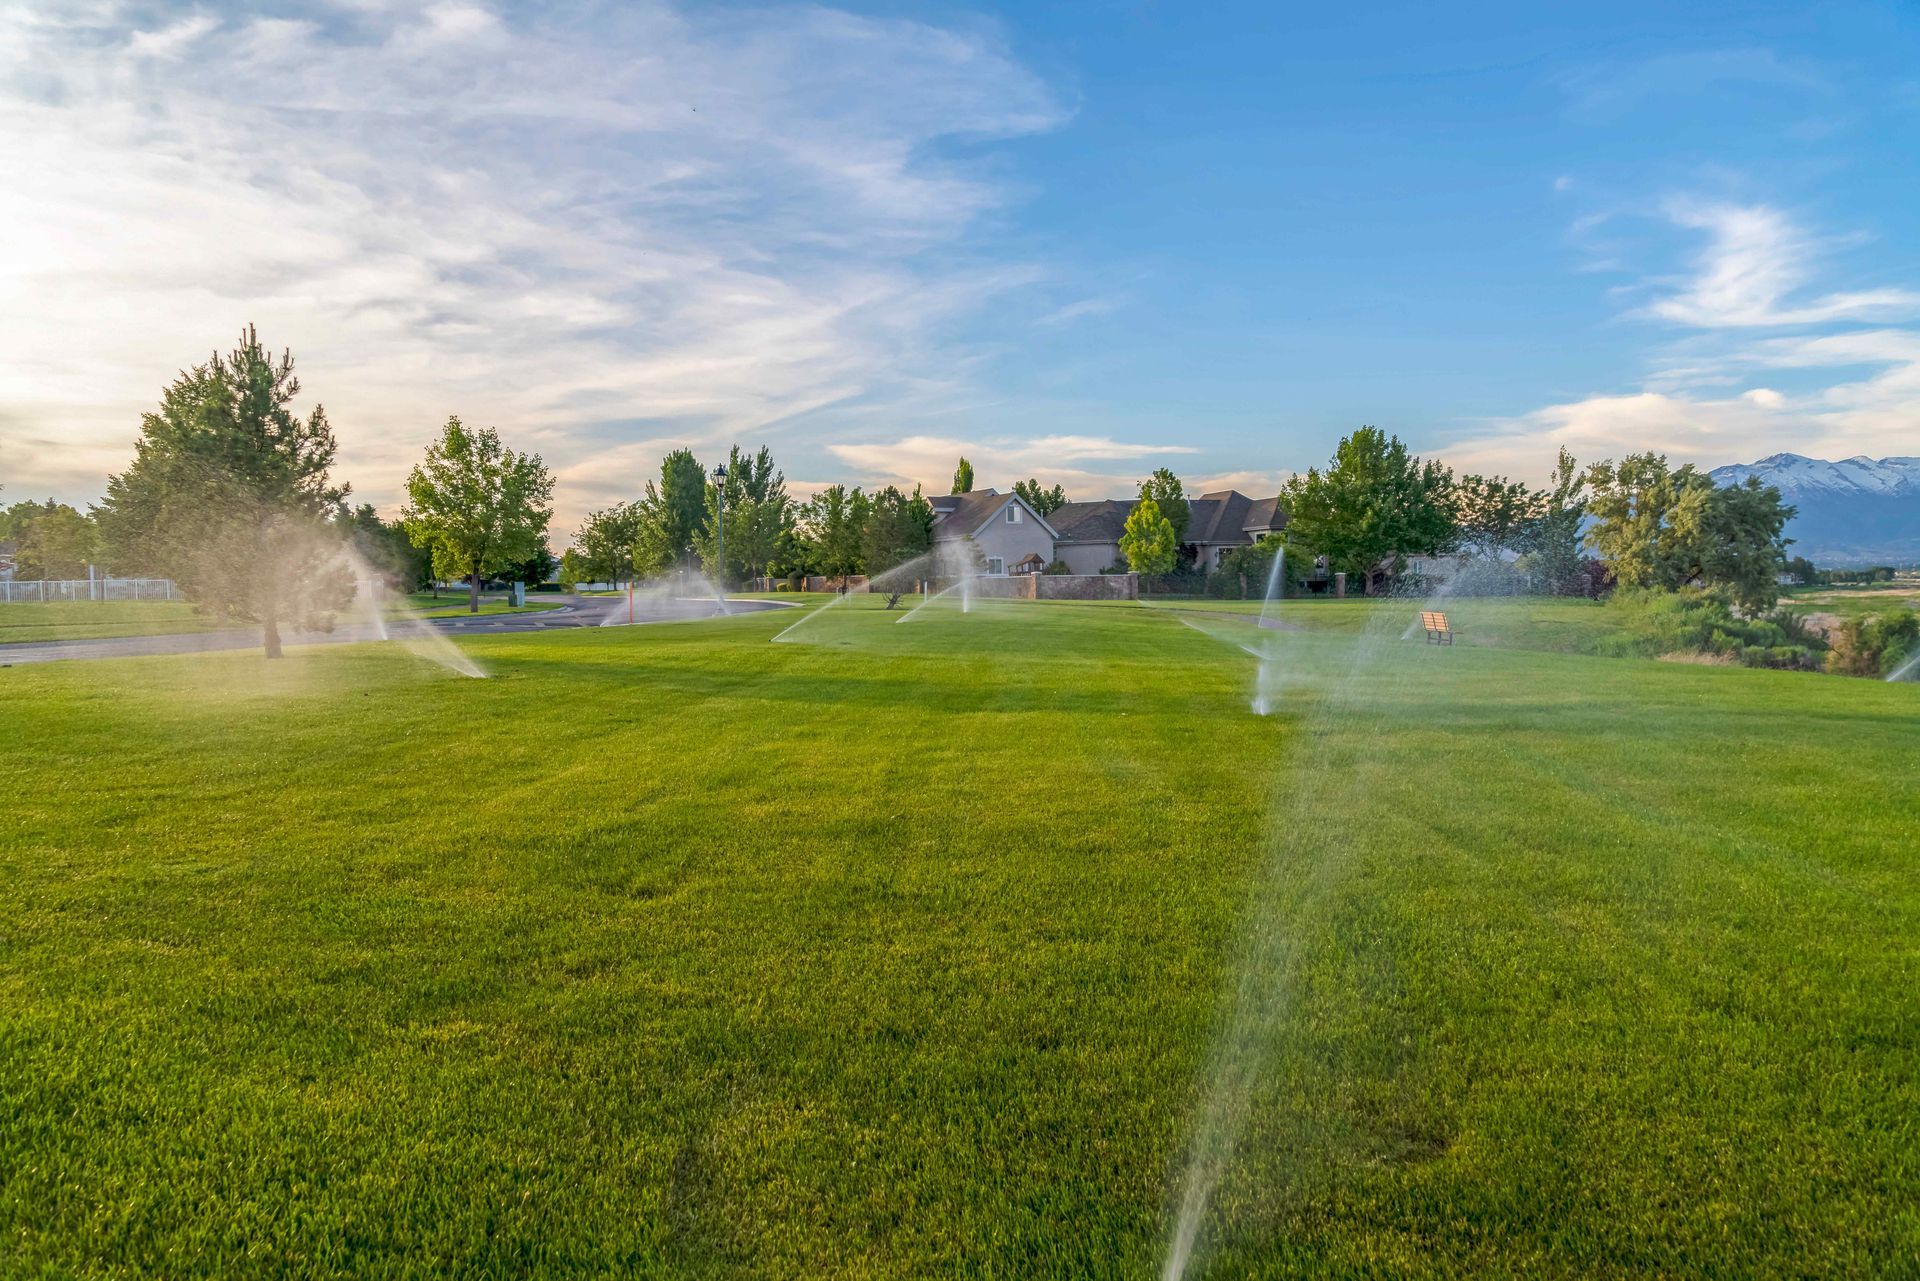 Large lawn being watered by sprinklers